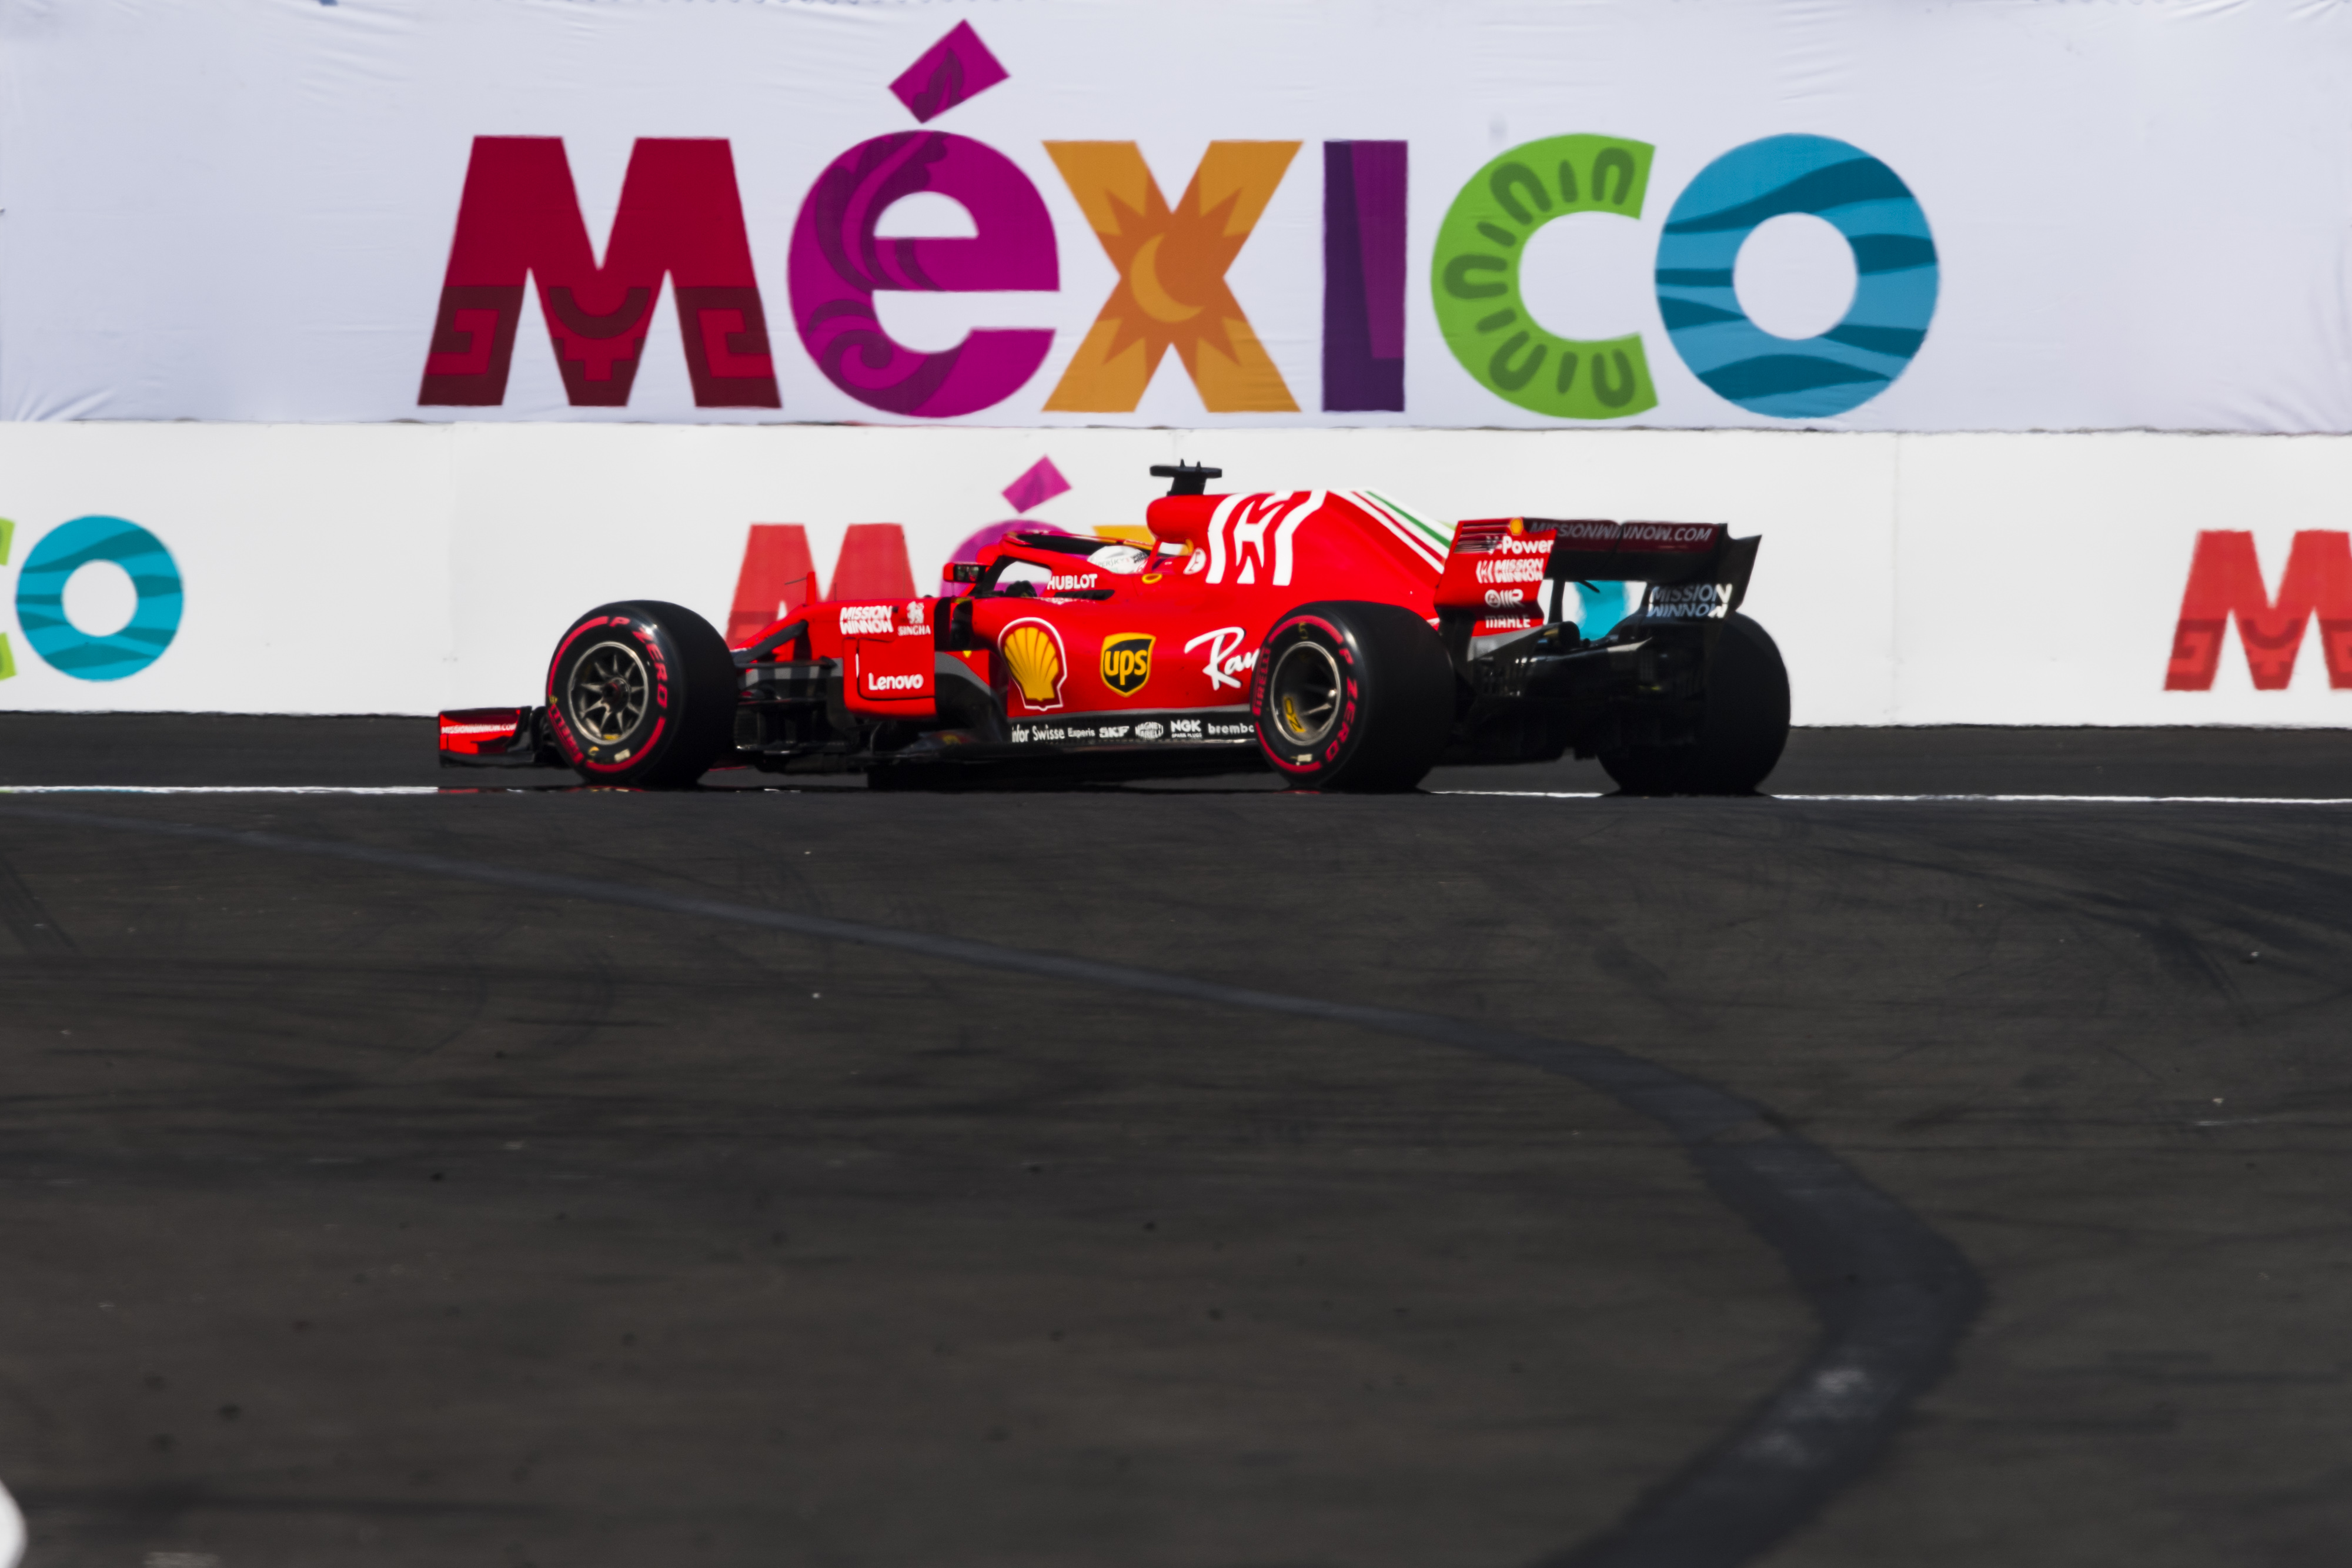 2016 mexican grand prix download free